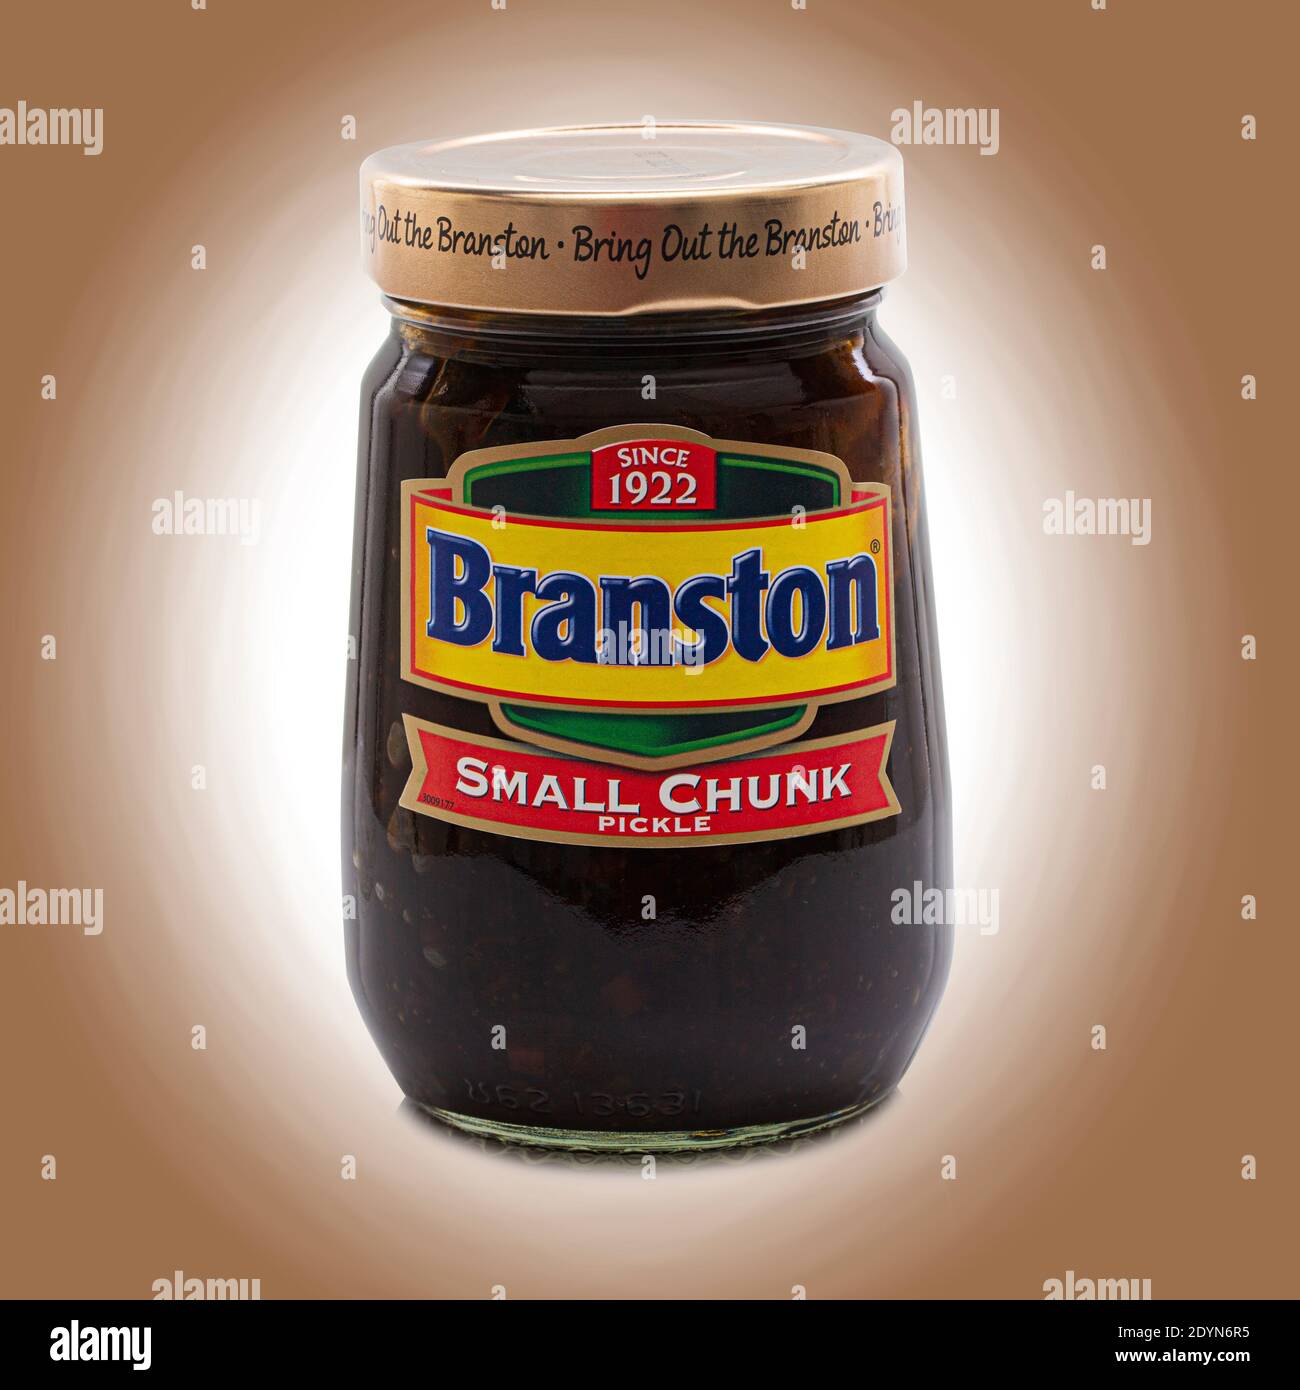 SWINDON, UK - 27. DEZEMBER 2020: Jar of Branston Small Chunk Pickle - Bring die Branston seit 1922, Stockfoto